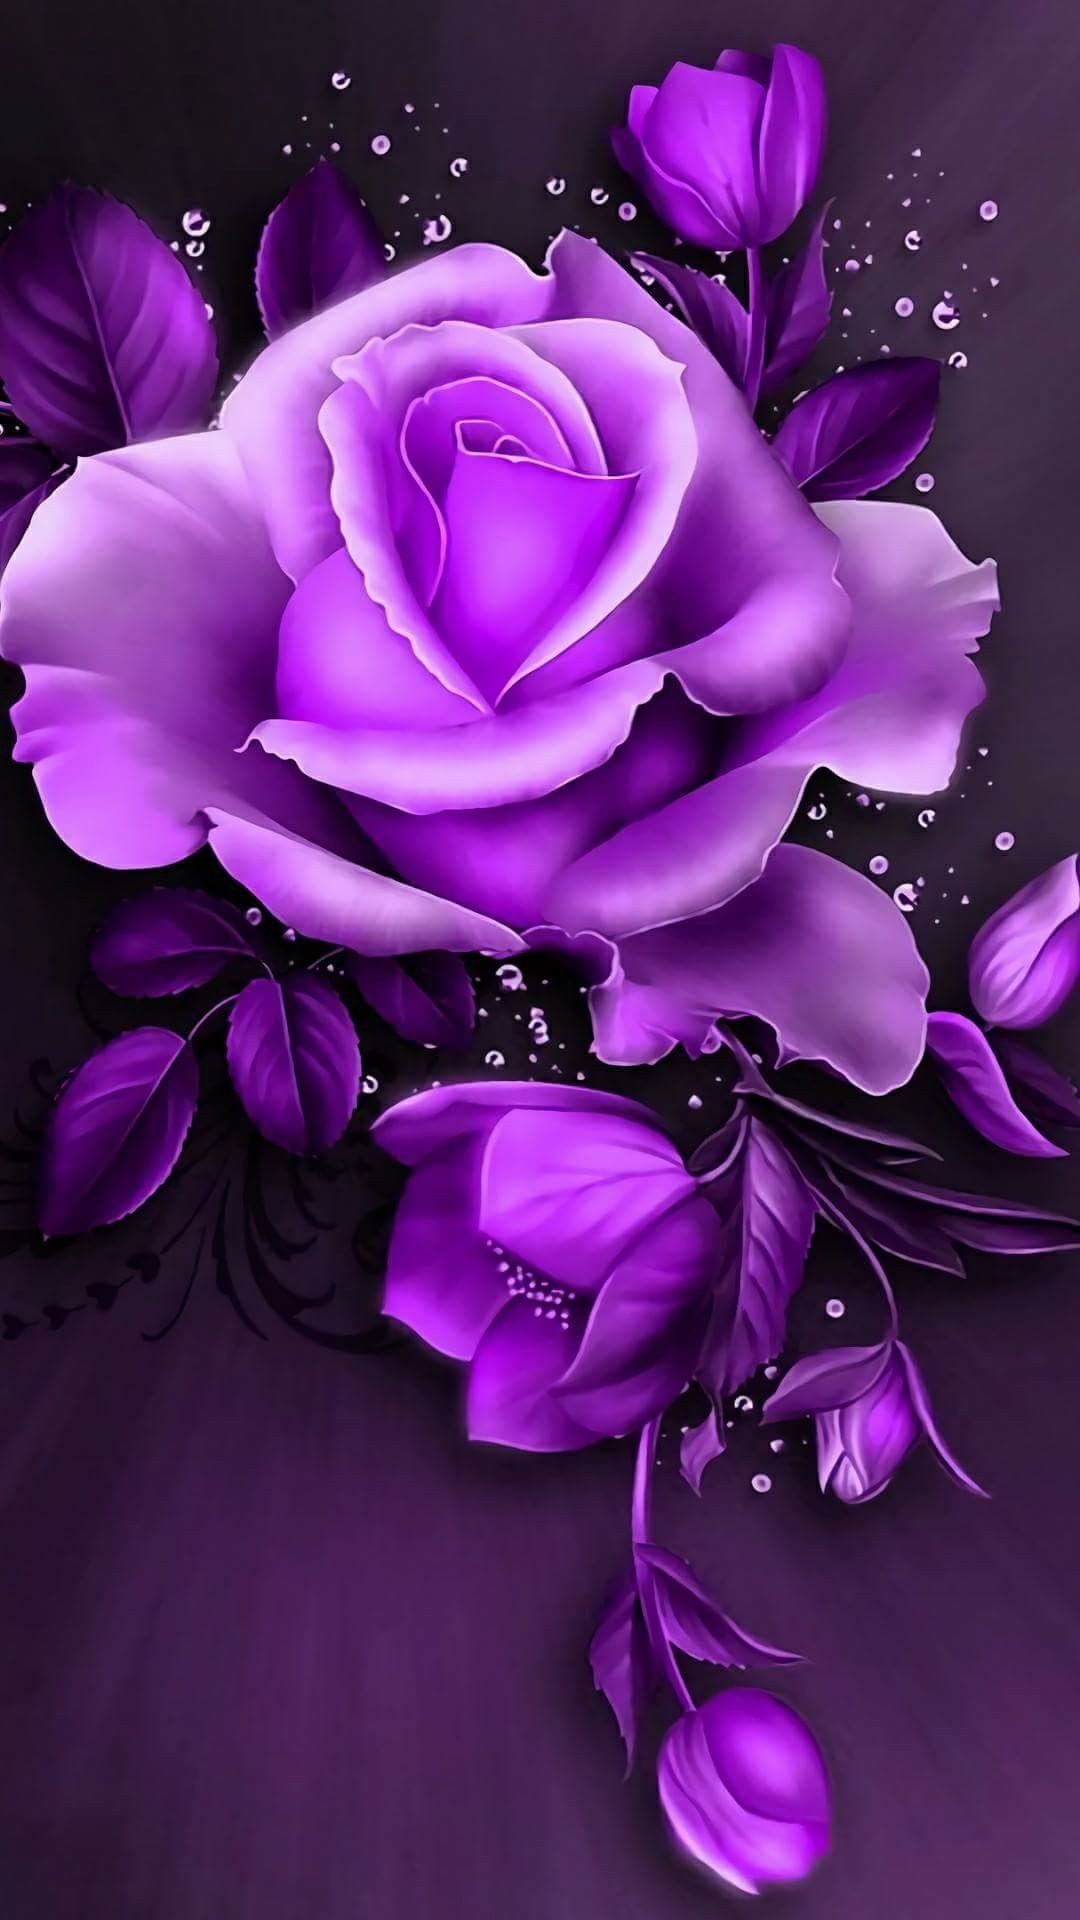 rosa viola wallpaper hd,viola,viola,fiore,petalo,rosa